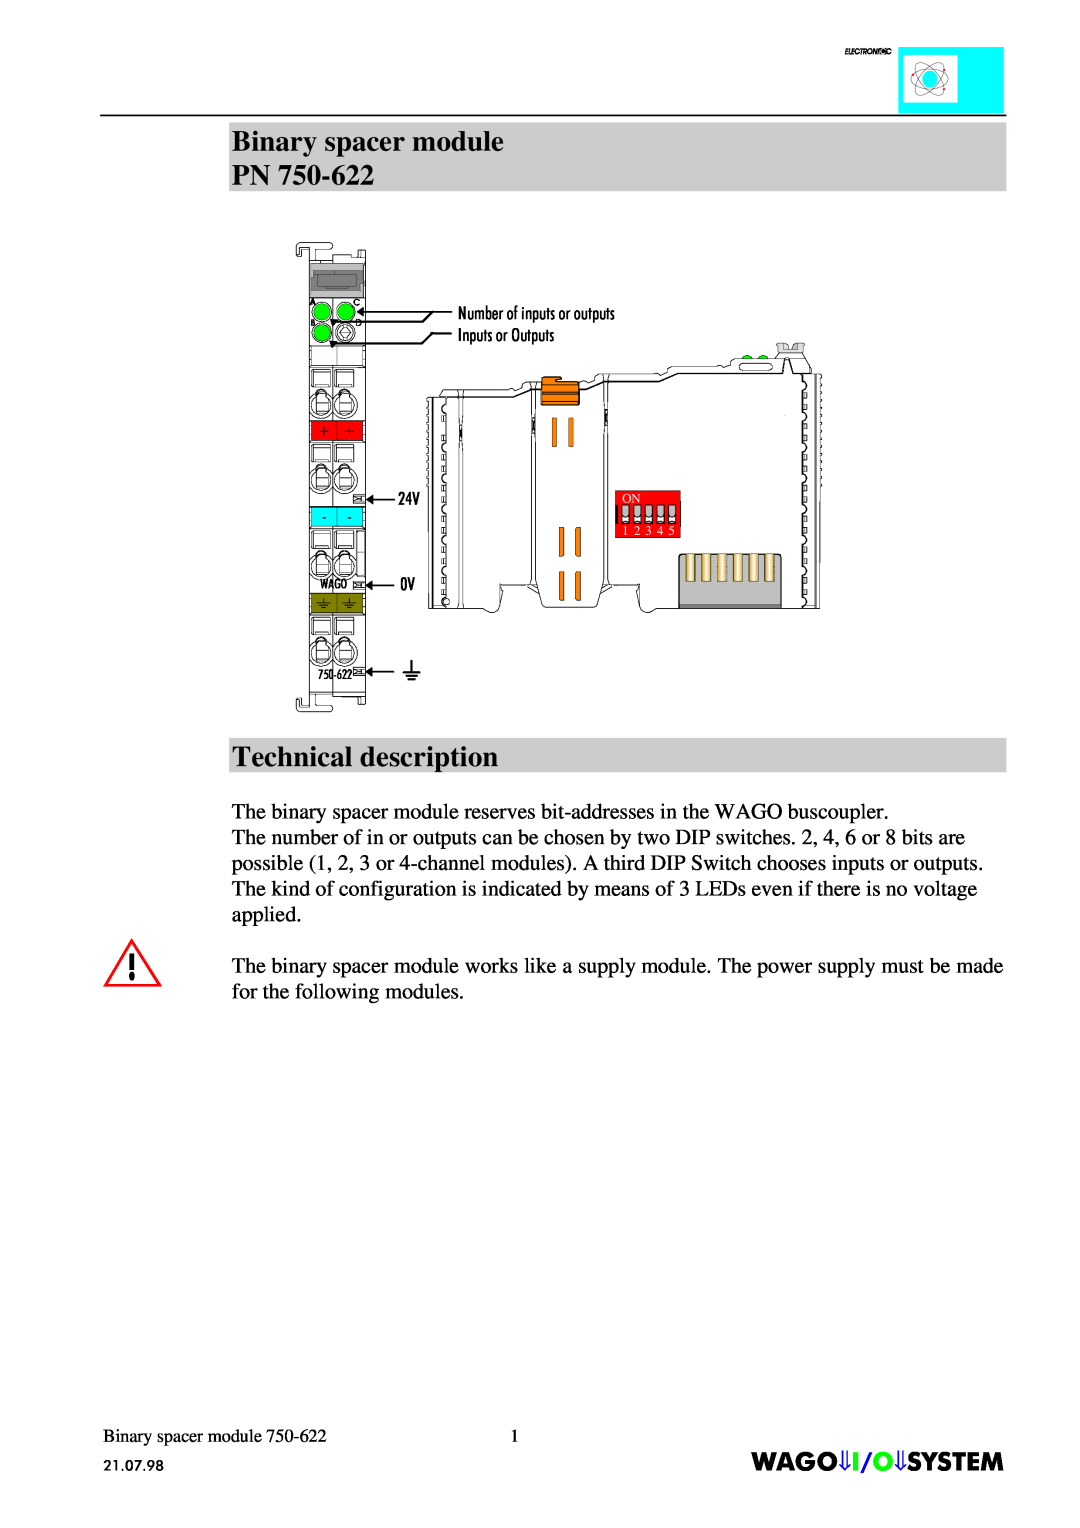 Quatech INTERBUS S manual Binary spacer module PN, Technical description, $*2,26670, 1 2 3 4 